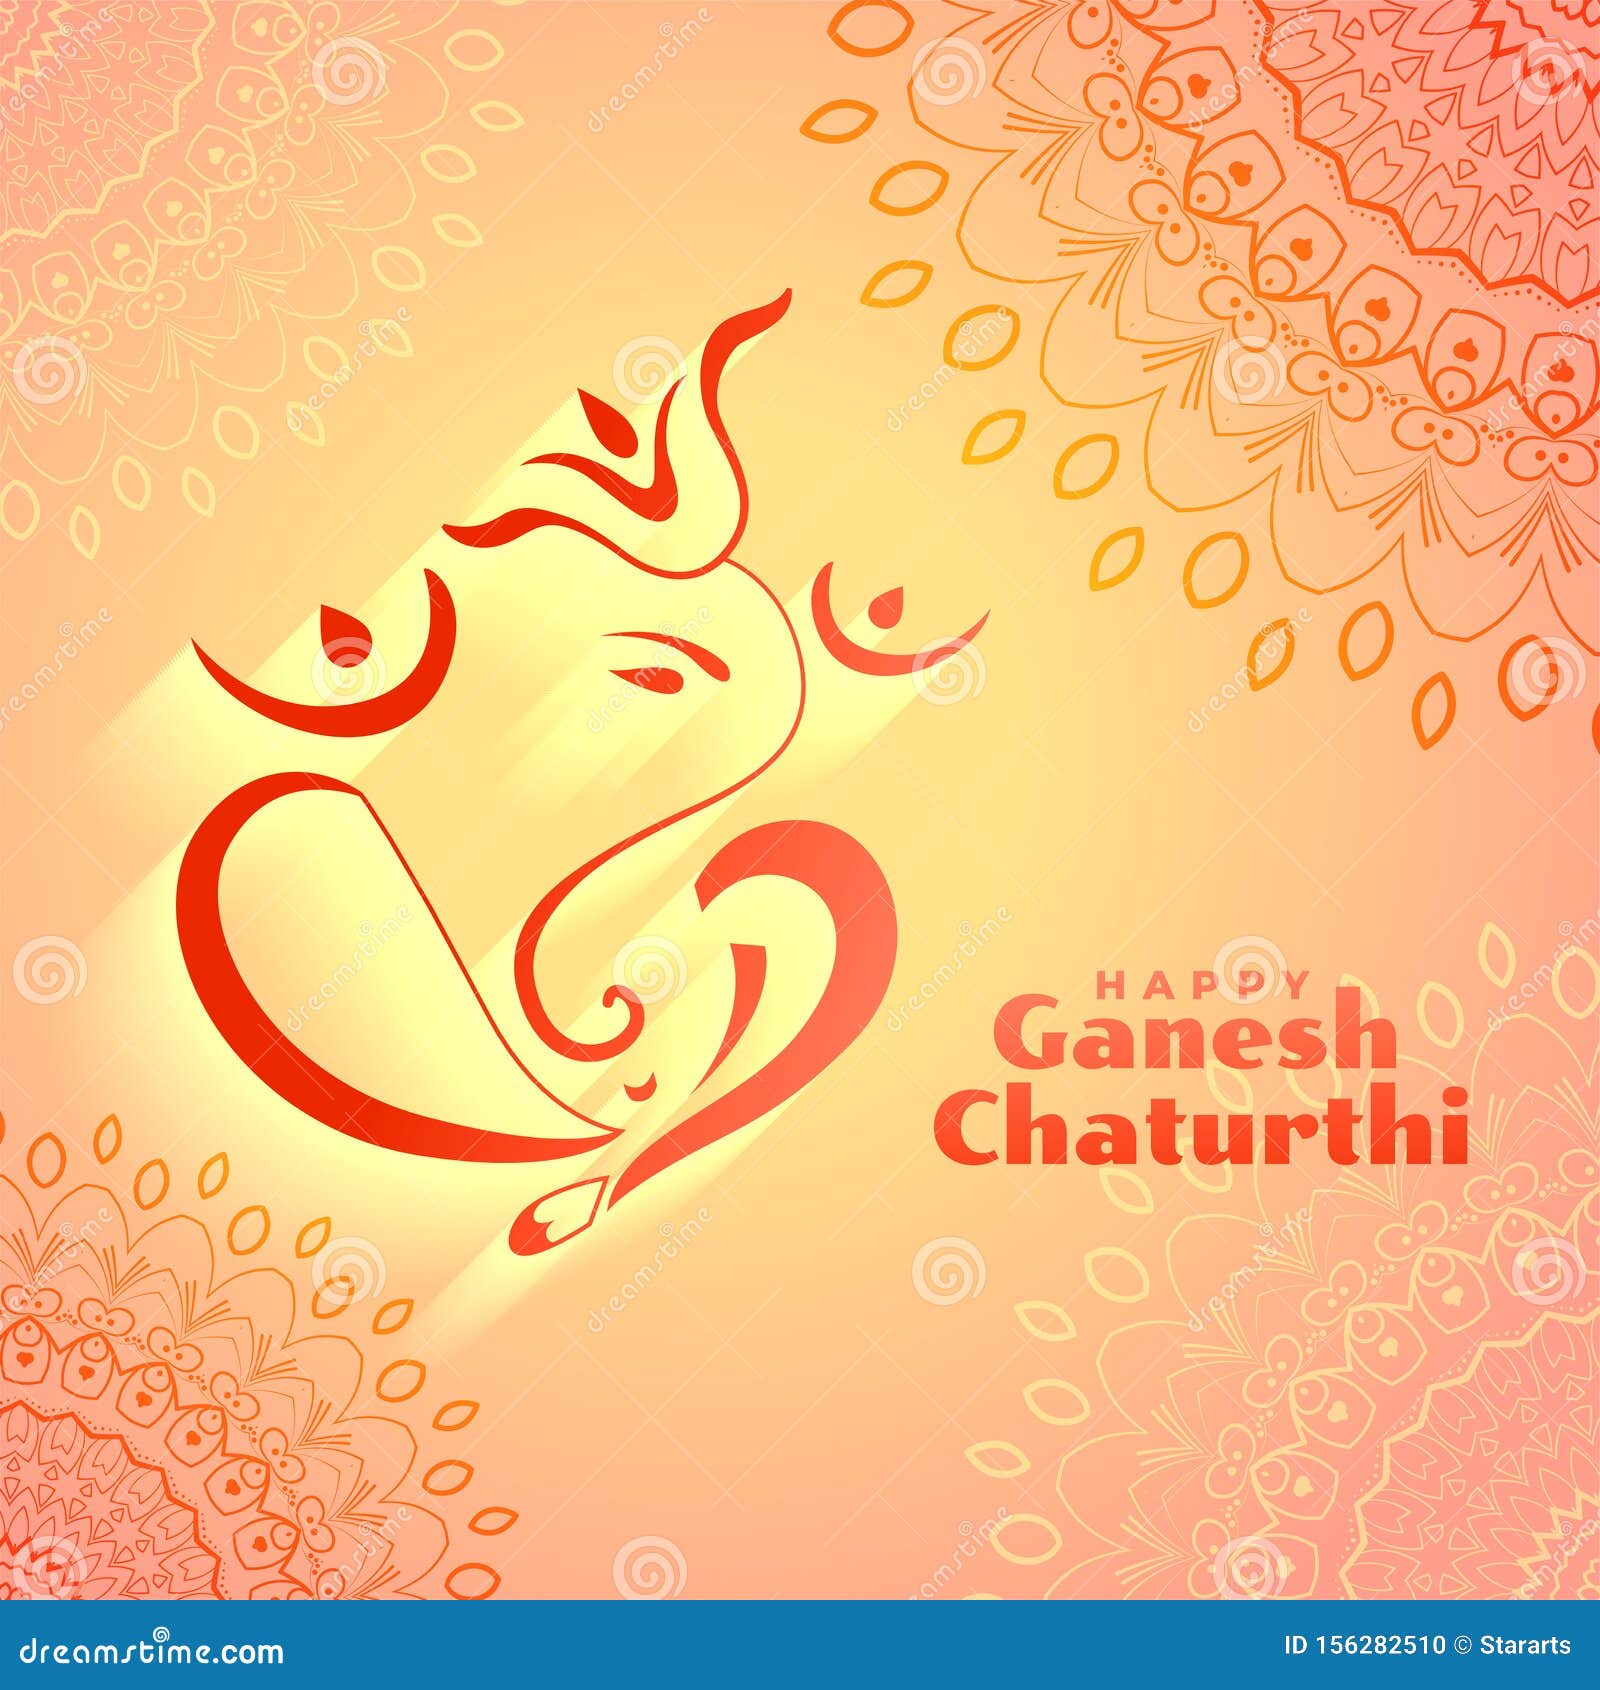 Indian religious festival ganesh chaturthi background design  wall  stickers idol divine india  myloviewcom